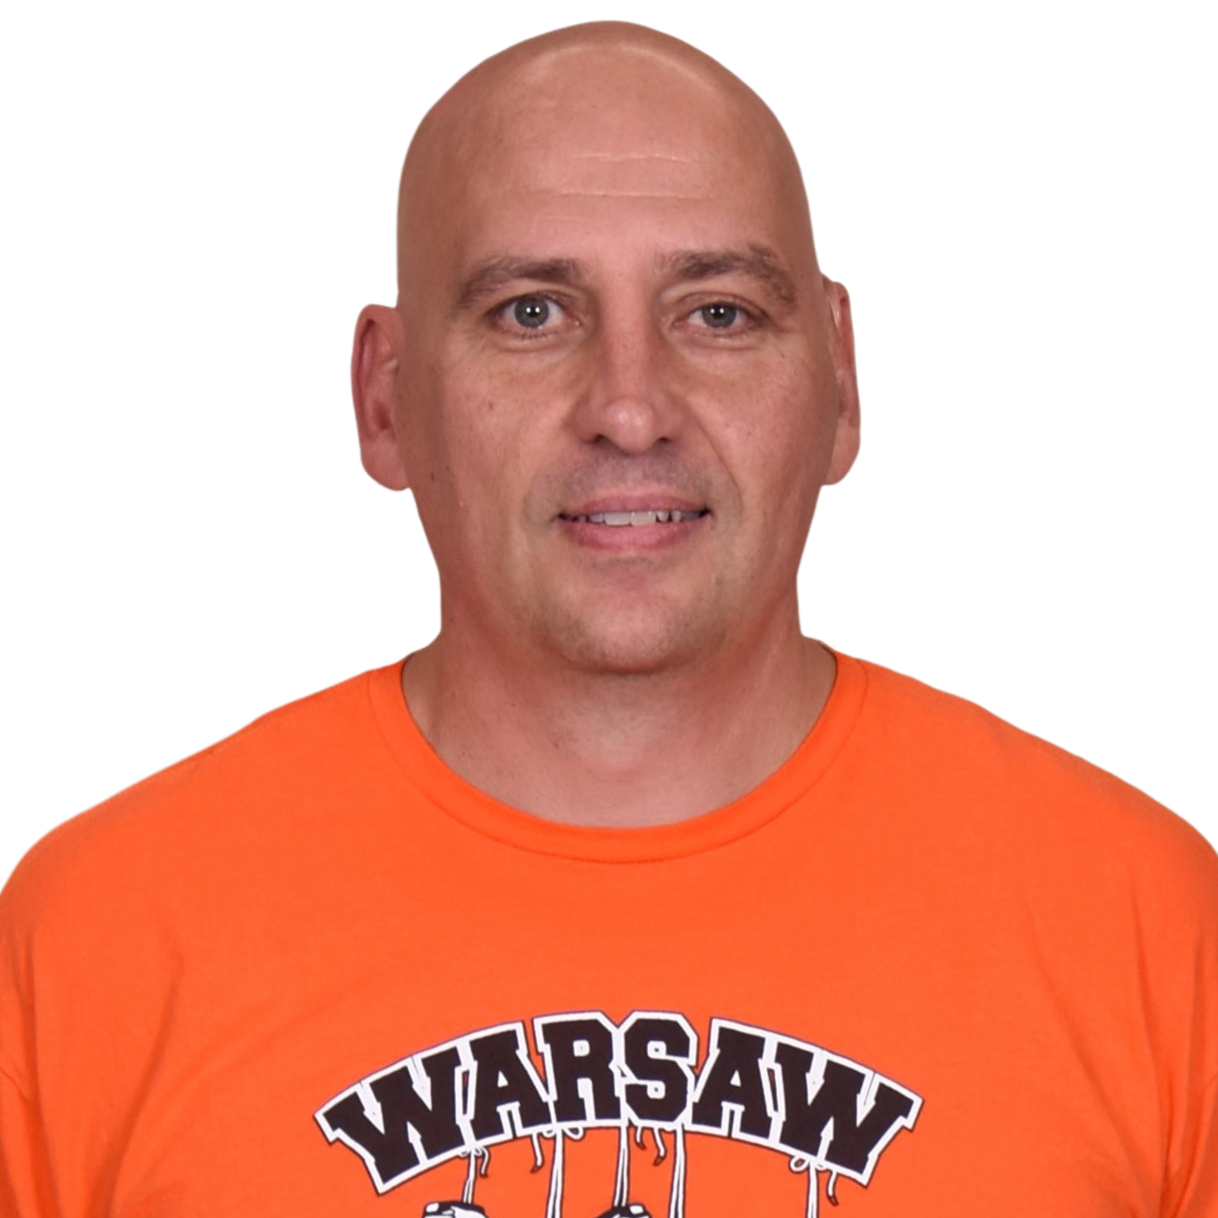 Krebs lenny -Coach Warsaw Smaller 1 mg cropped-1